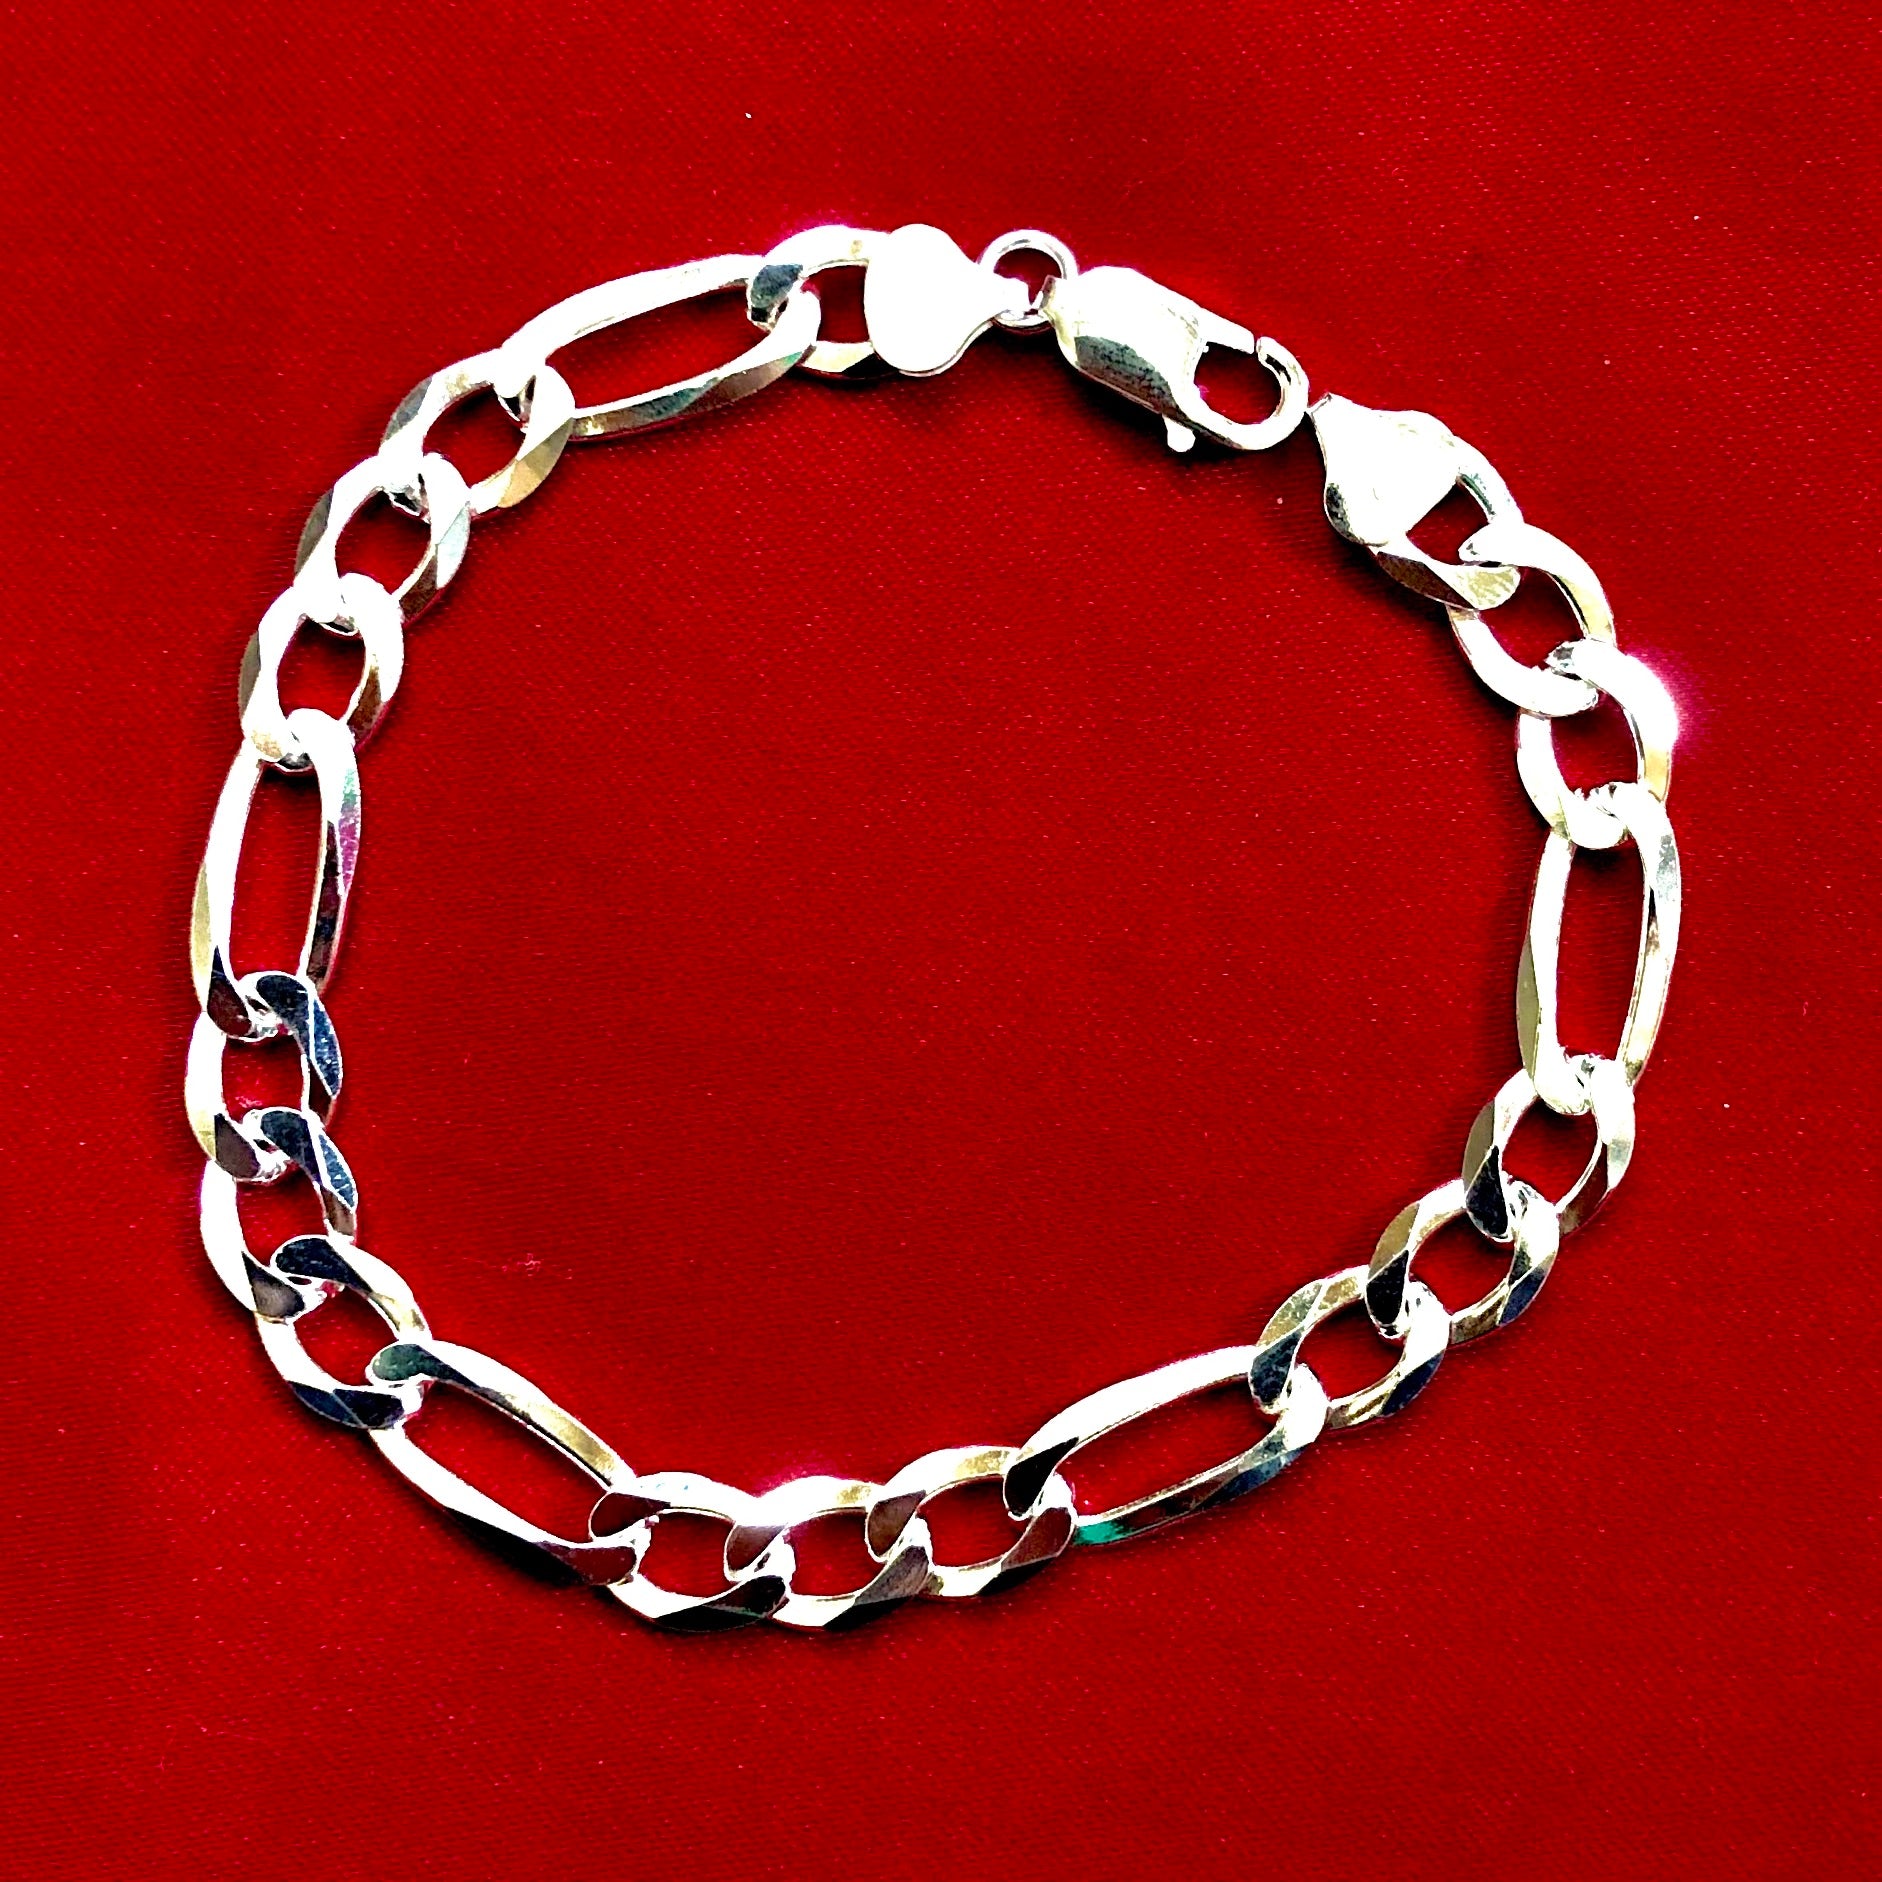 925 silver rubber bracelet for men with fish cross HOLYART | online sales  on HOLYART.com